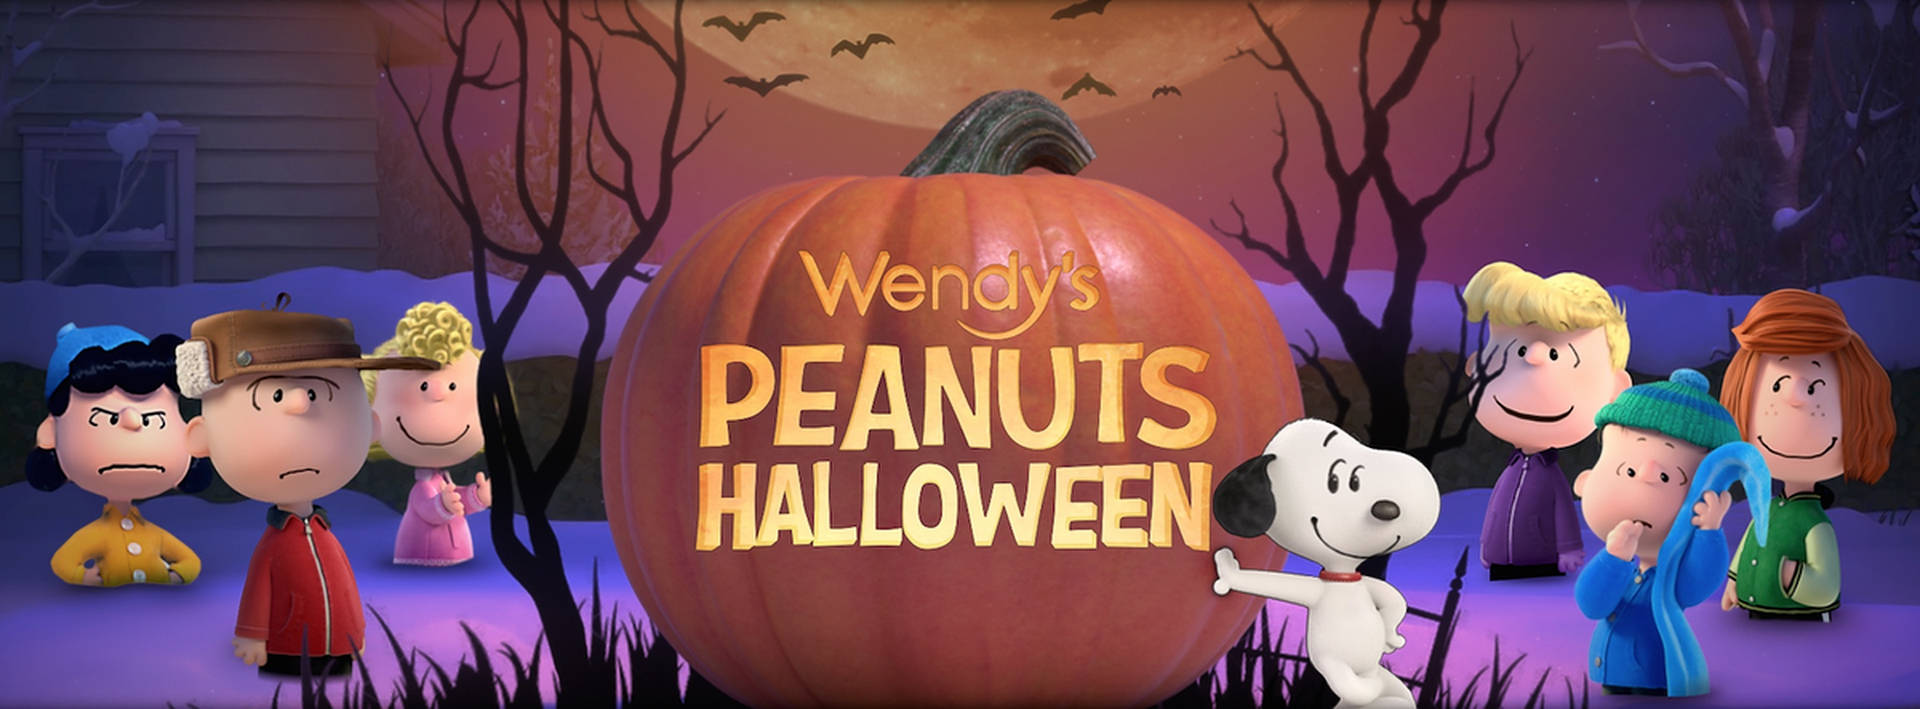 Charliebrown Wendy's Peanuts Halloween - Charlie Brown, Wendys, Peanuts Och Halloween. Wallpaper